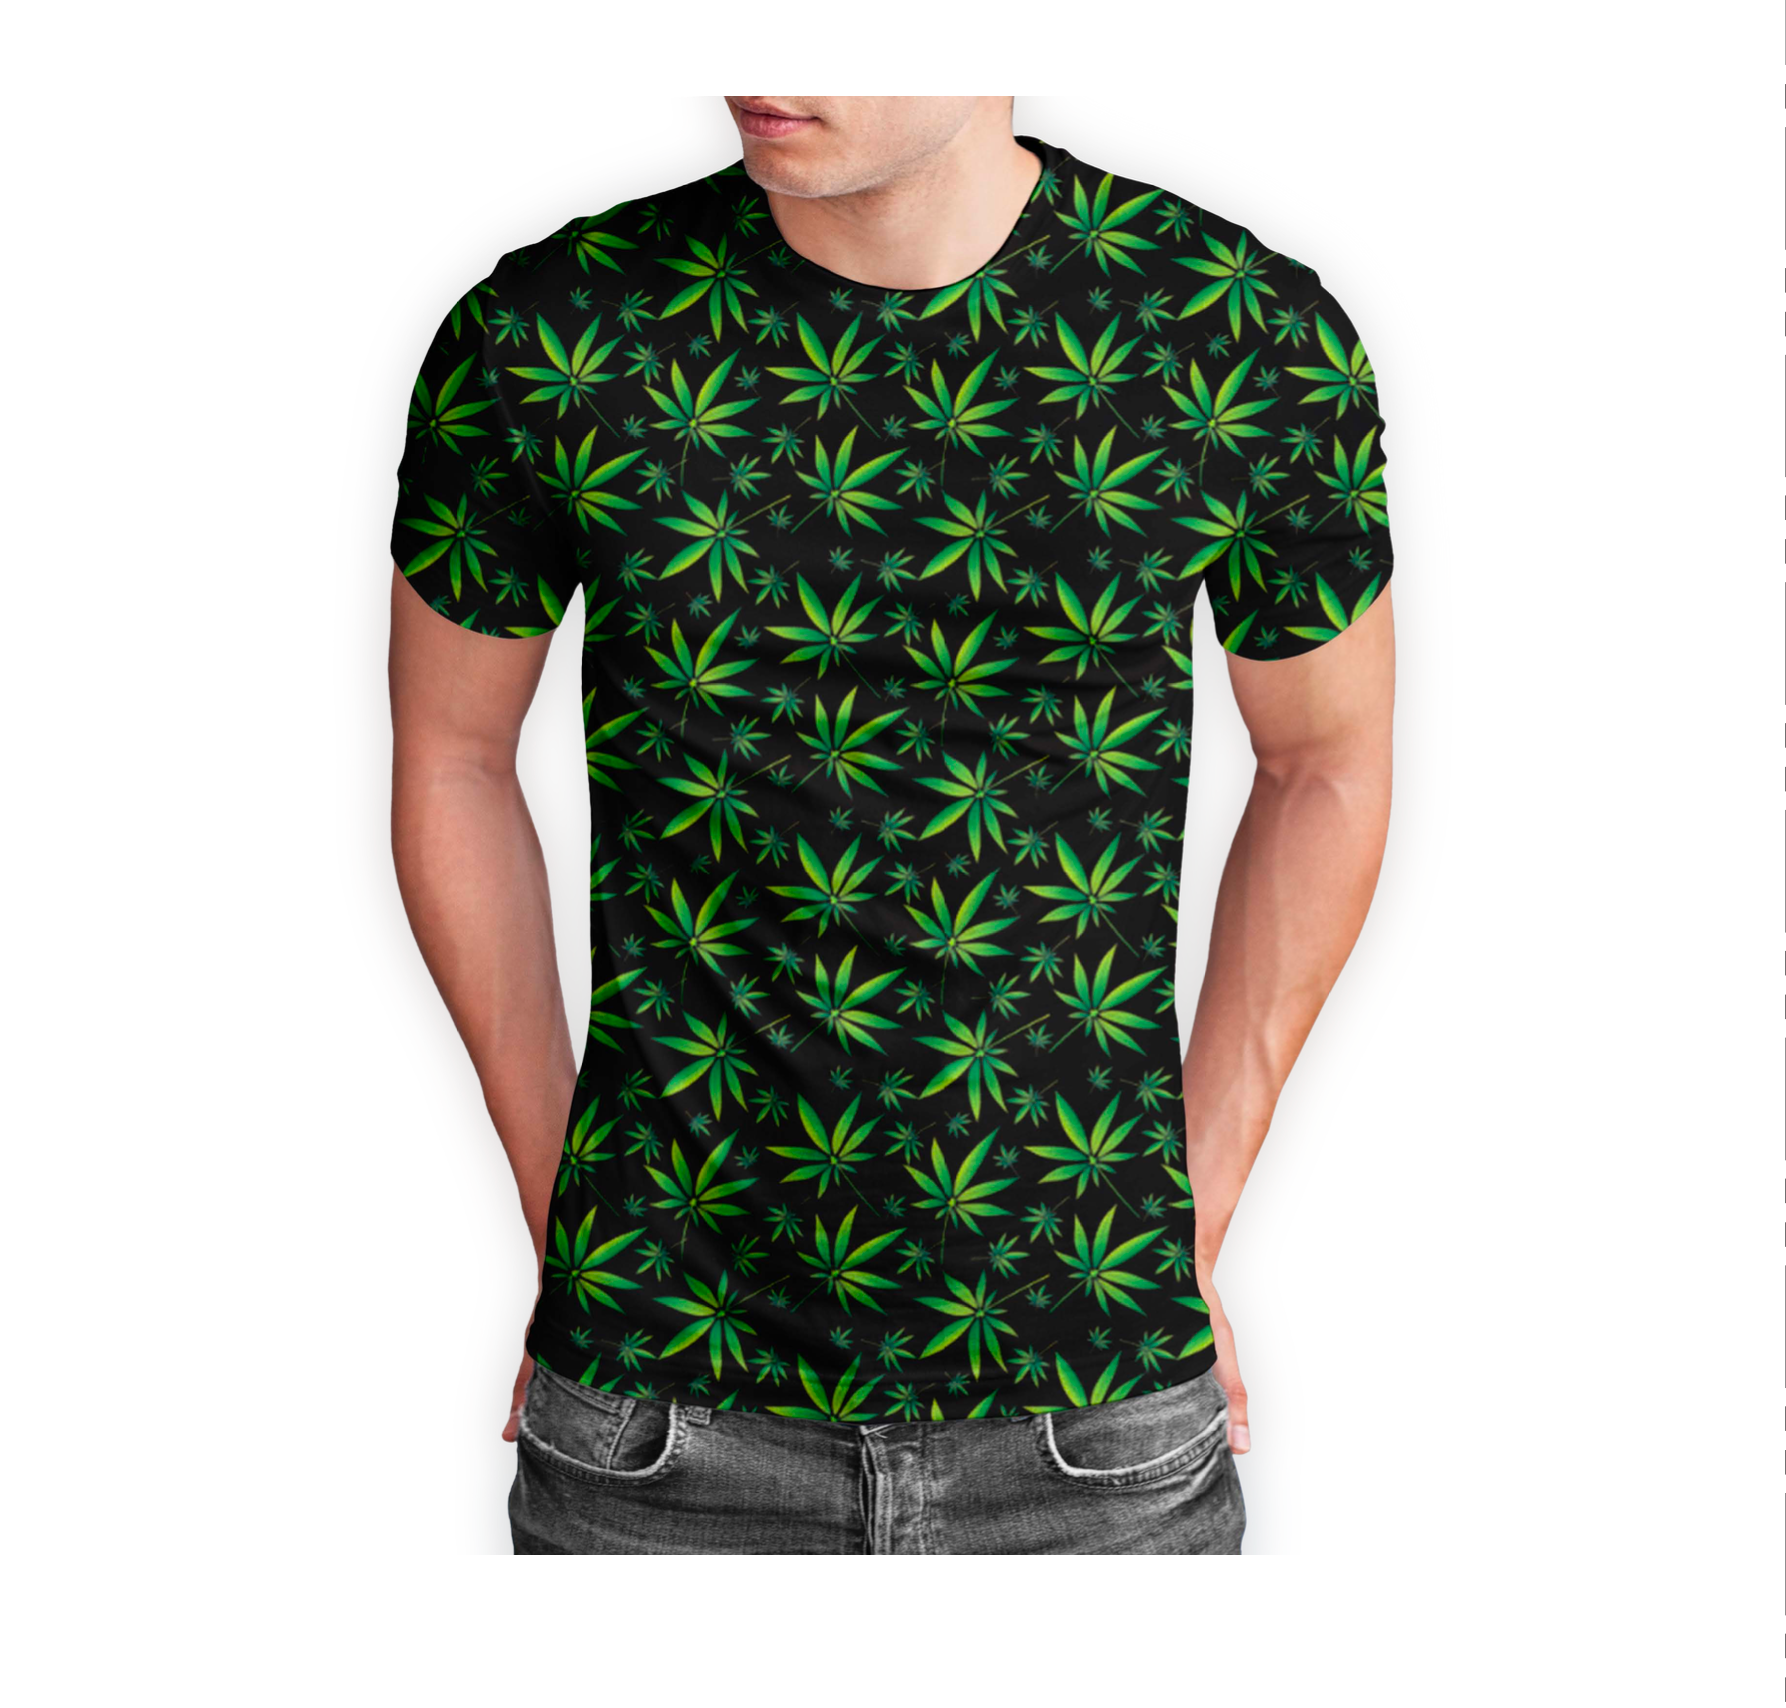 Green Leaf Black T-Shirt Short Sleeve Pack of  5 Units 1-M, 1-L, 1-XL, 1-XXL, 1-XXXL -- 100% Polyester